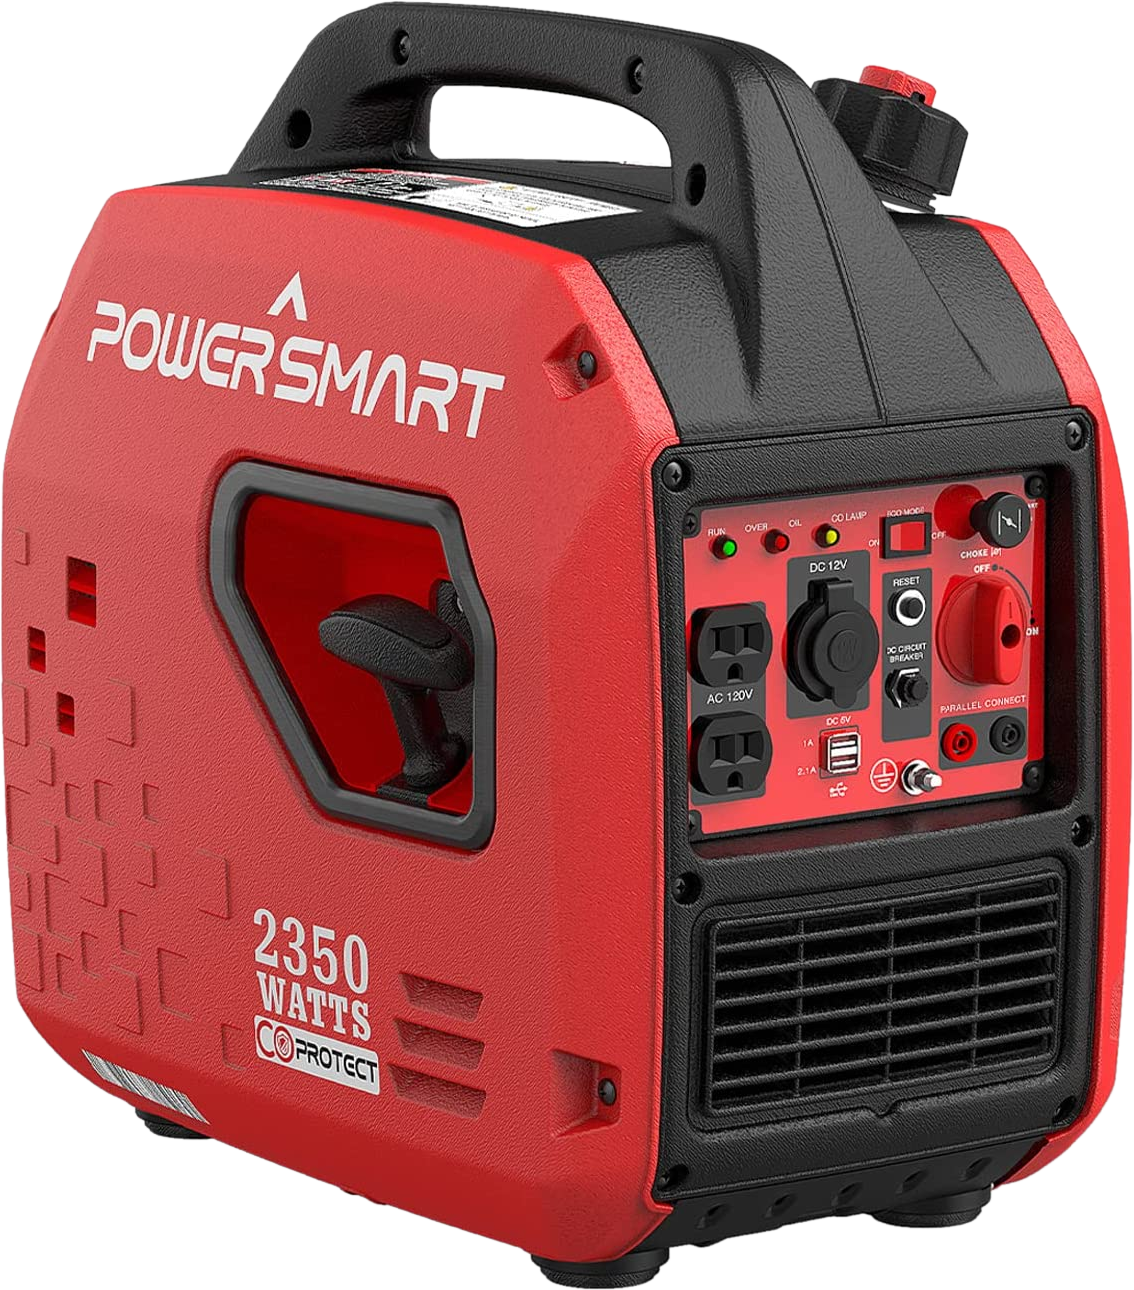 Powersmart PS5025C Inverter Generator 1900/2350W Gas 4 Stroke Recoil Start New